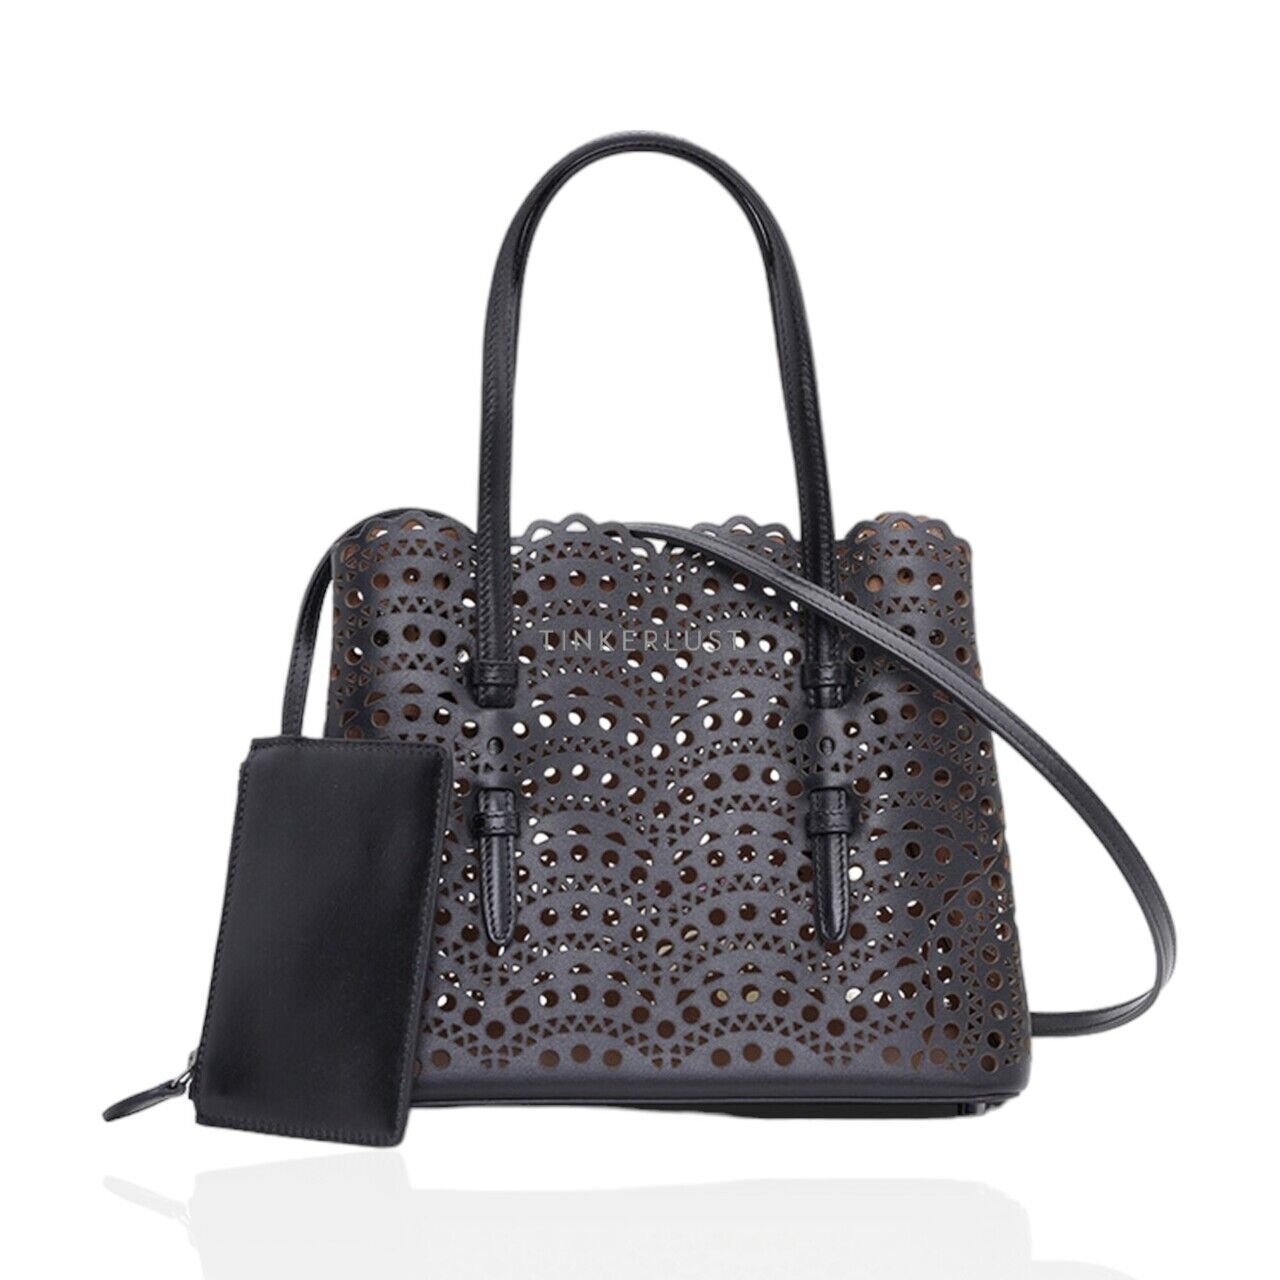 Alaia Mina 25 Lasered Black Handbag